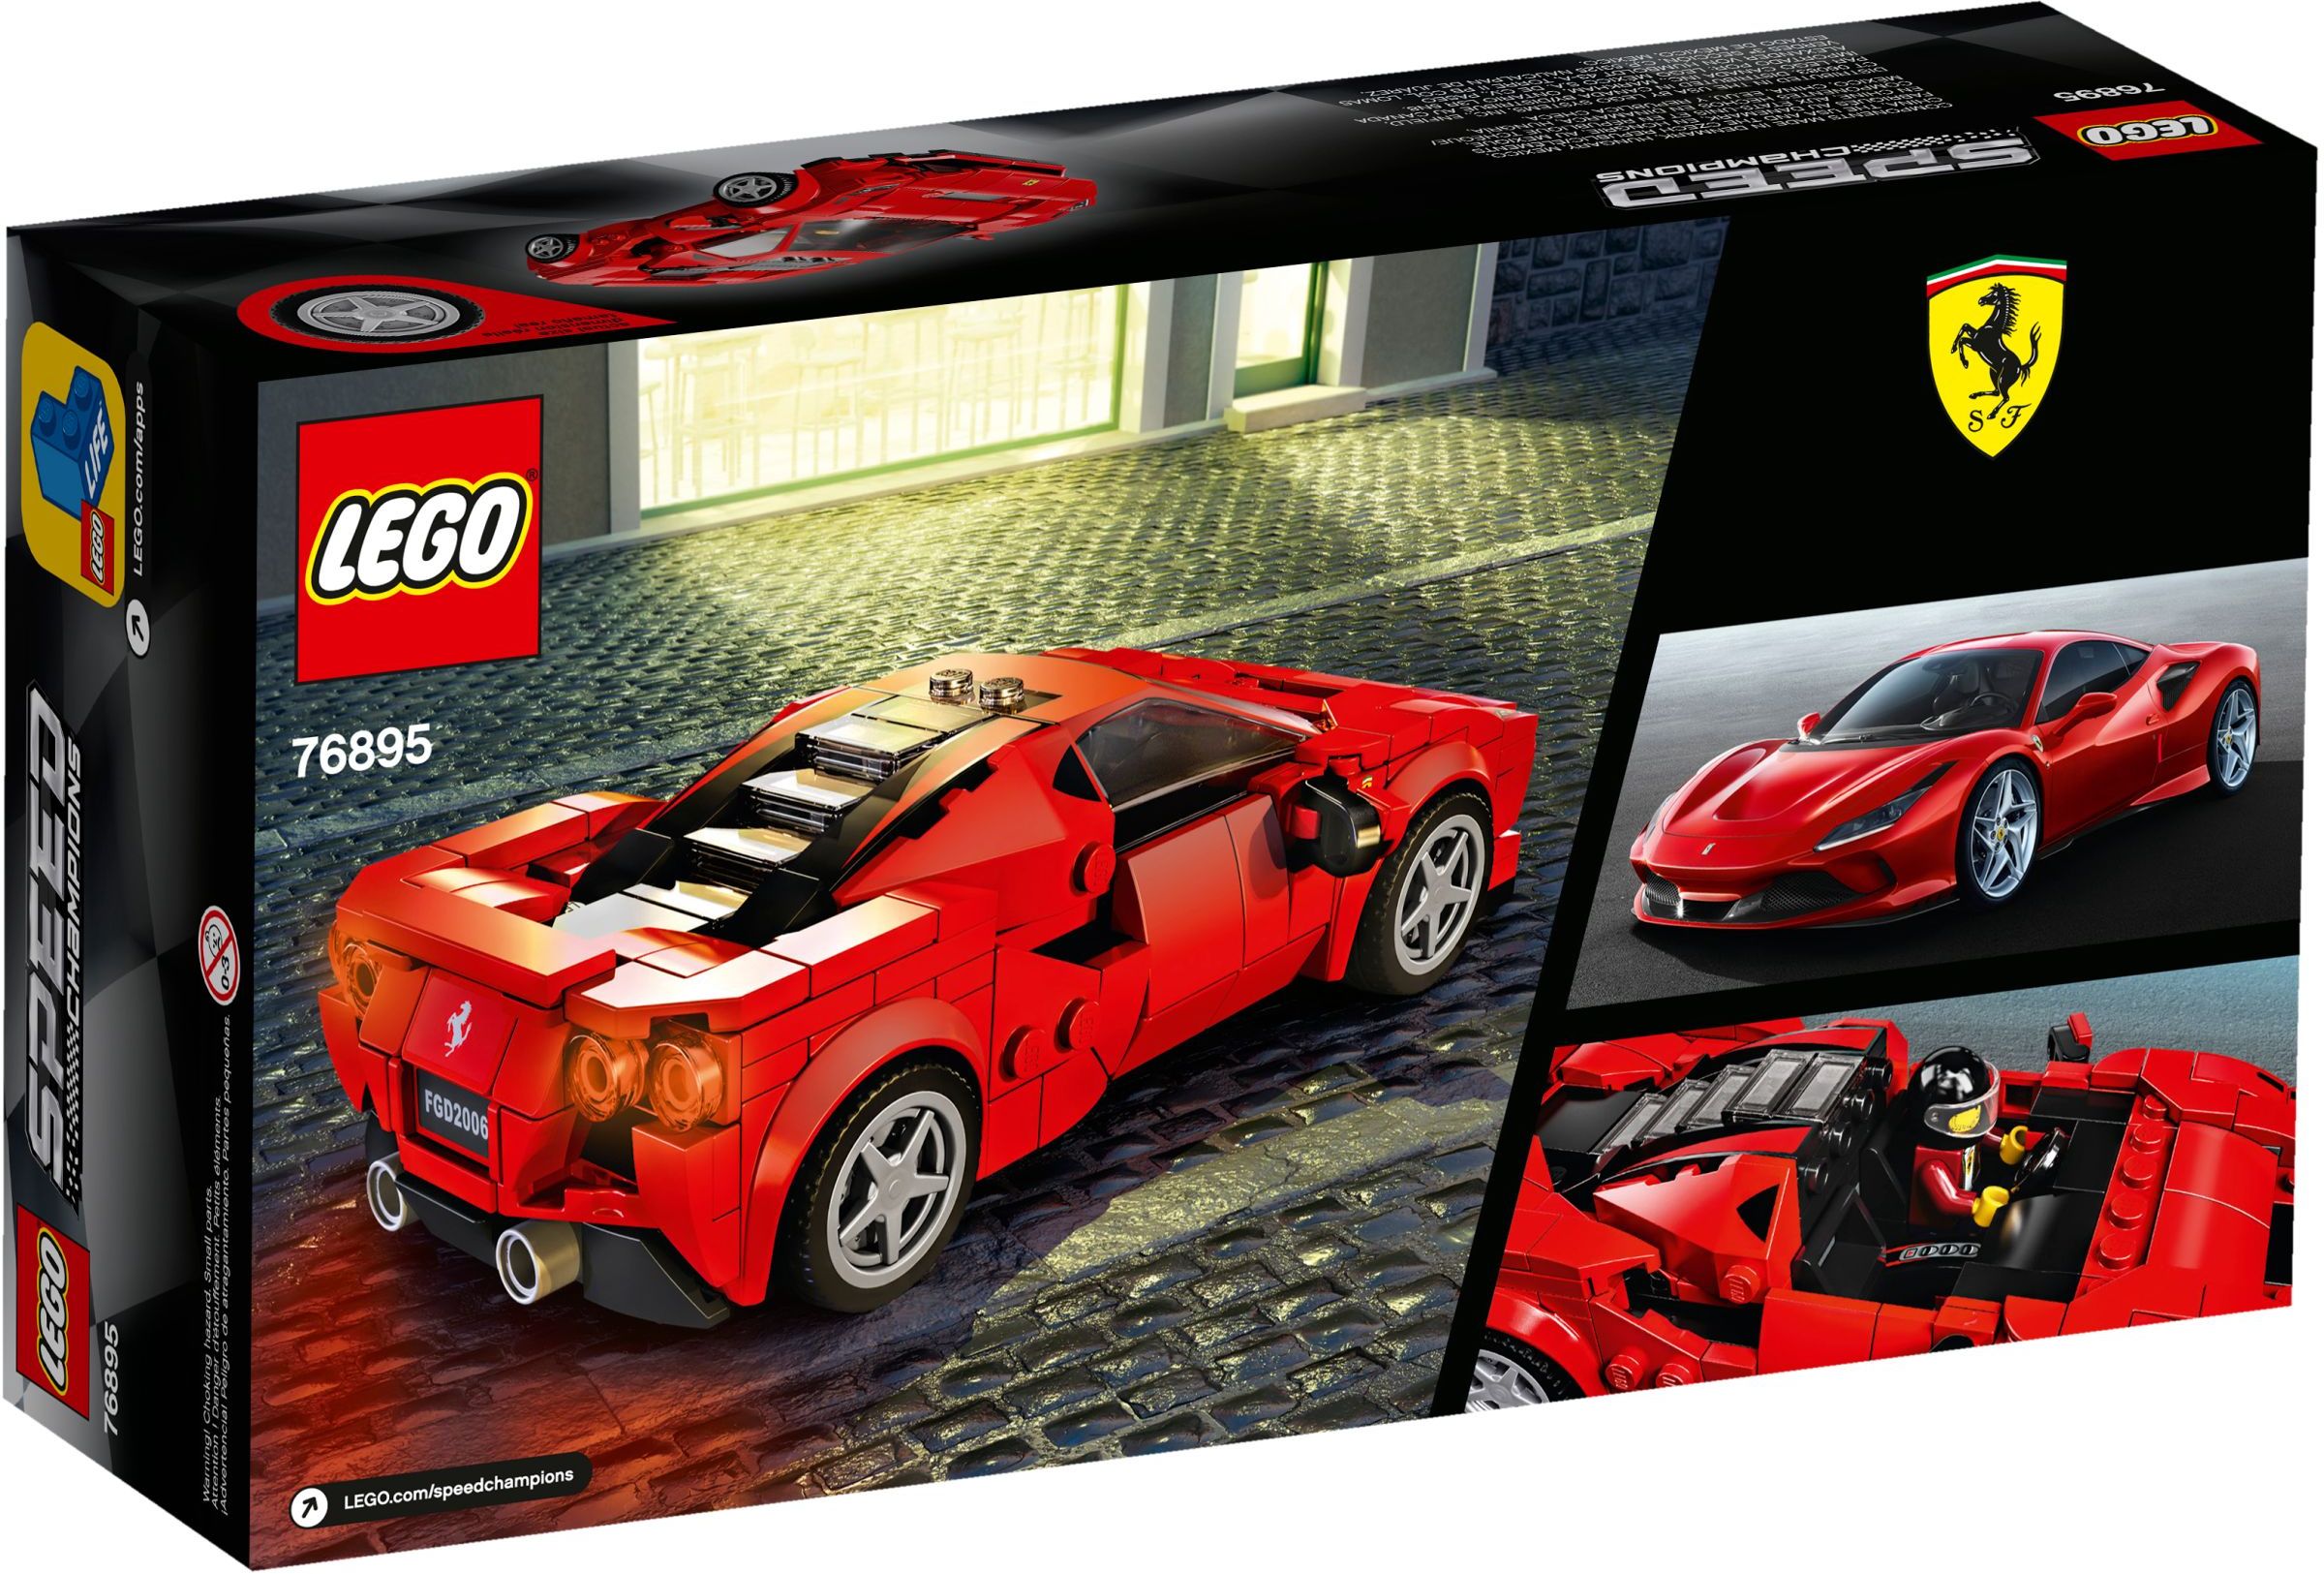 Lego Speed Champions 76895 Ferrari F8 Tributo Review